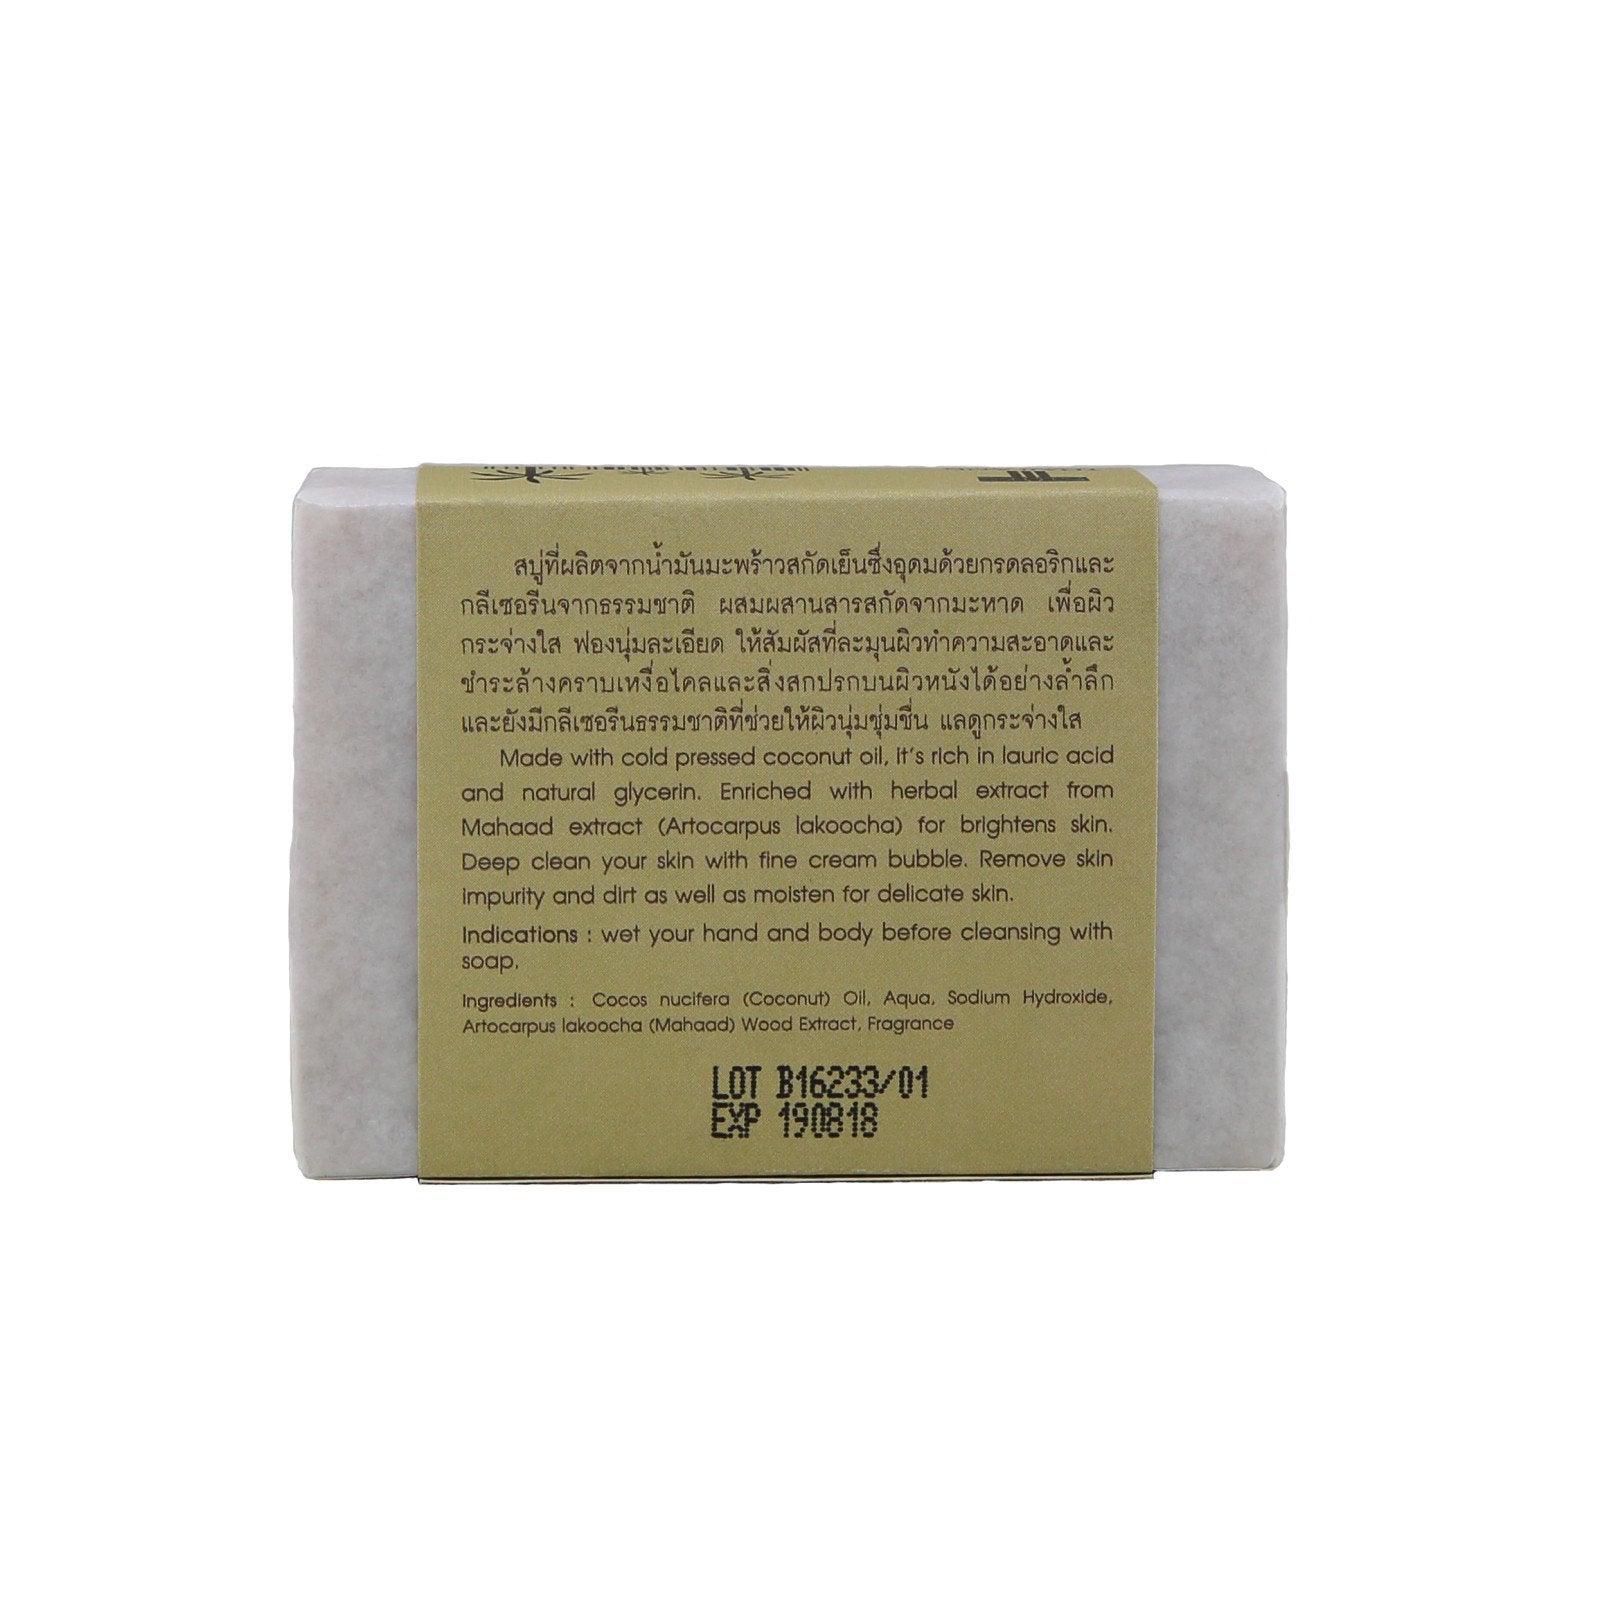 Tropicana Organic Cold Pressed (Application) Natural Coconut Soap Bar - Fruity -100g - WERONE